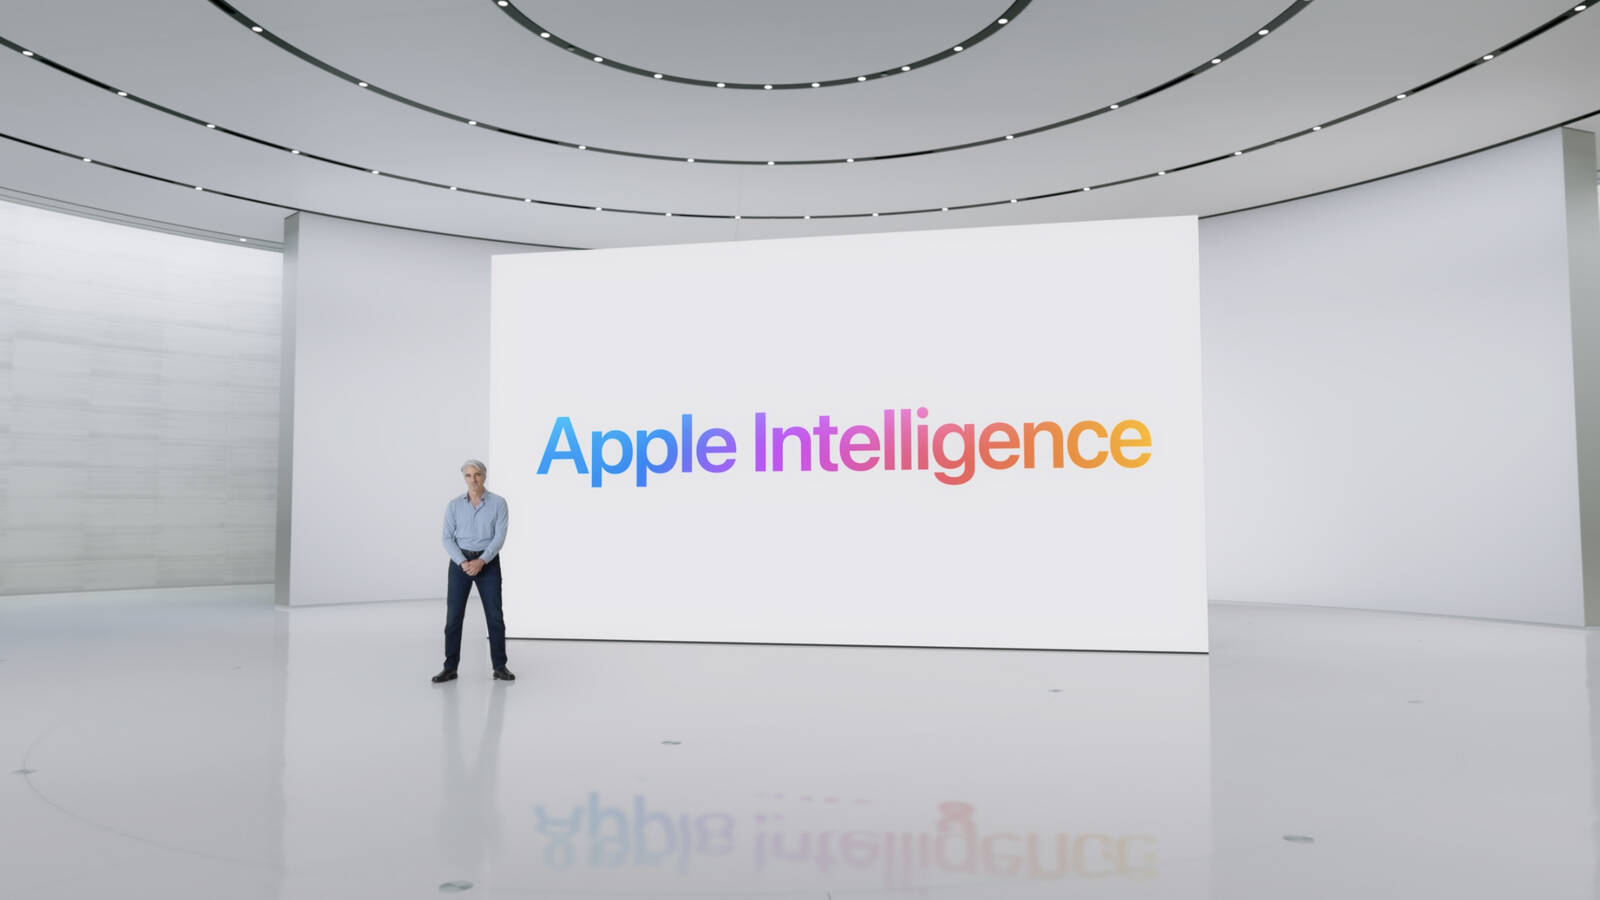 Apple makes AI push with Apple Intelligence